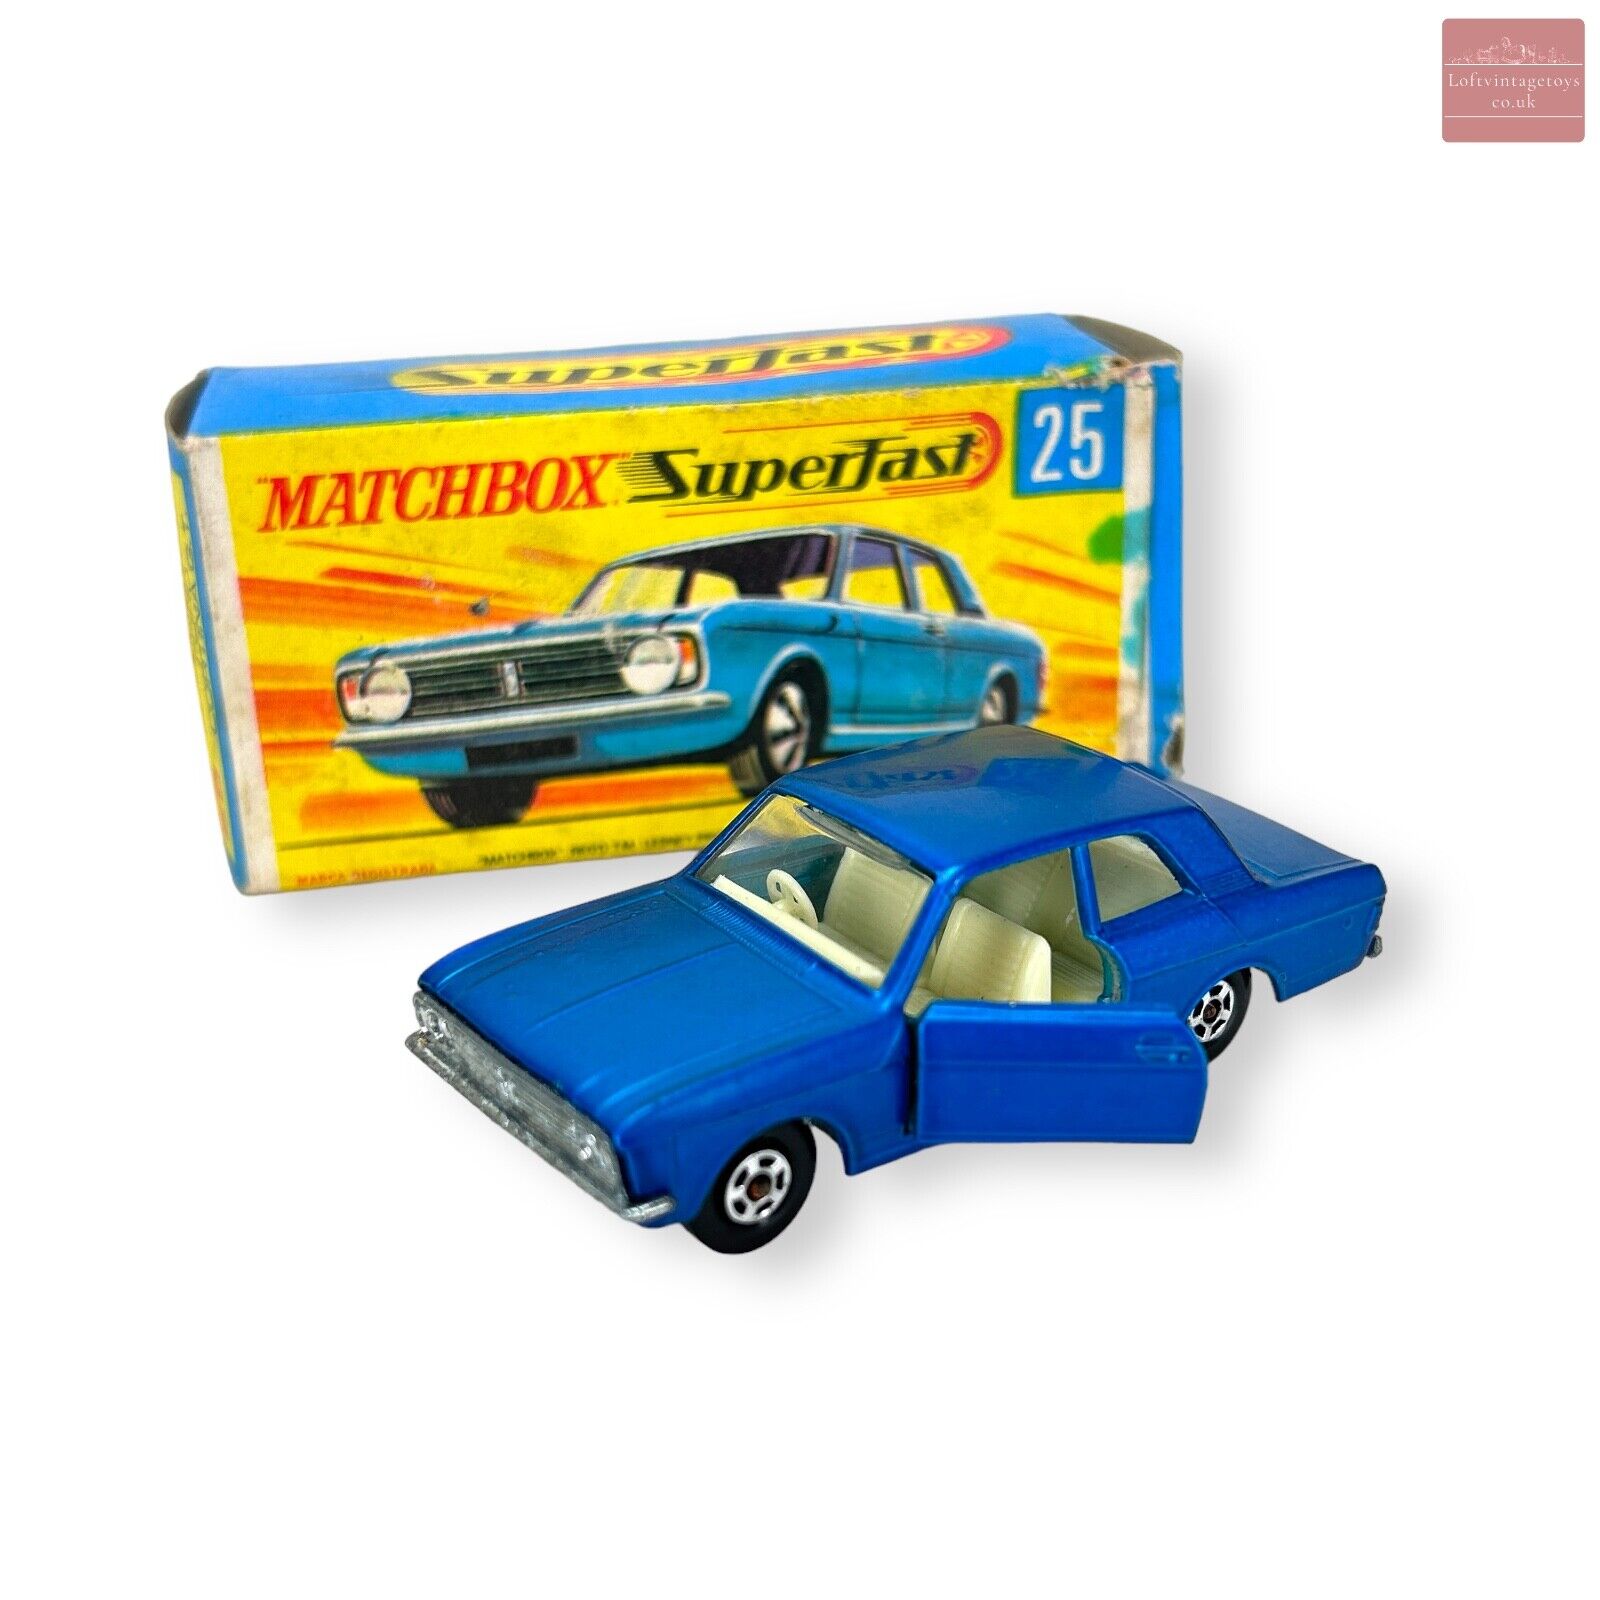 Matchbox Superfast No. 25 Ford Cortina G.T. – LoftVintageToys